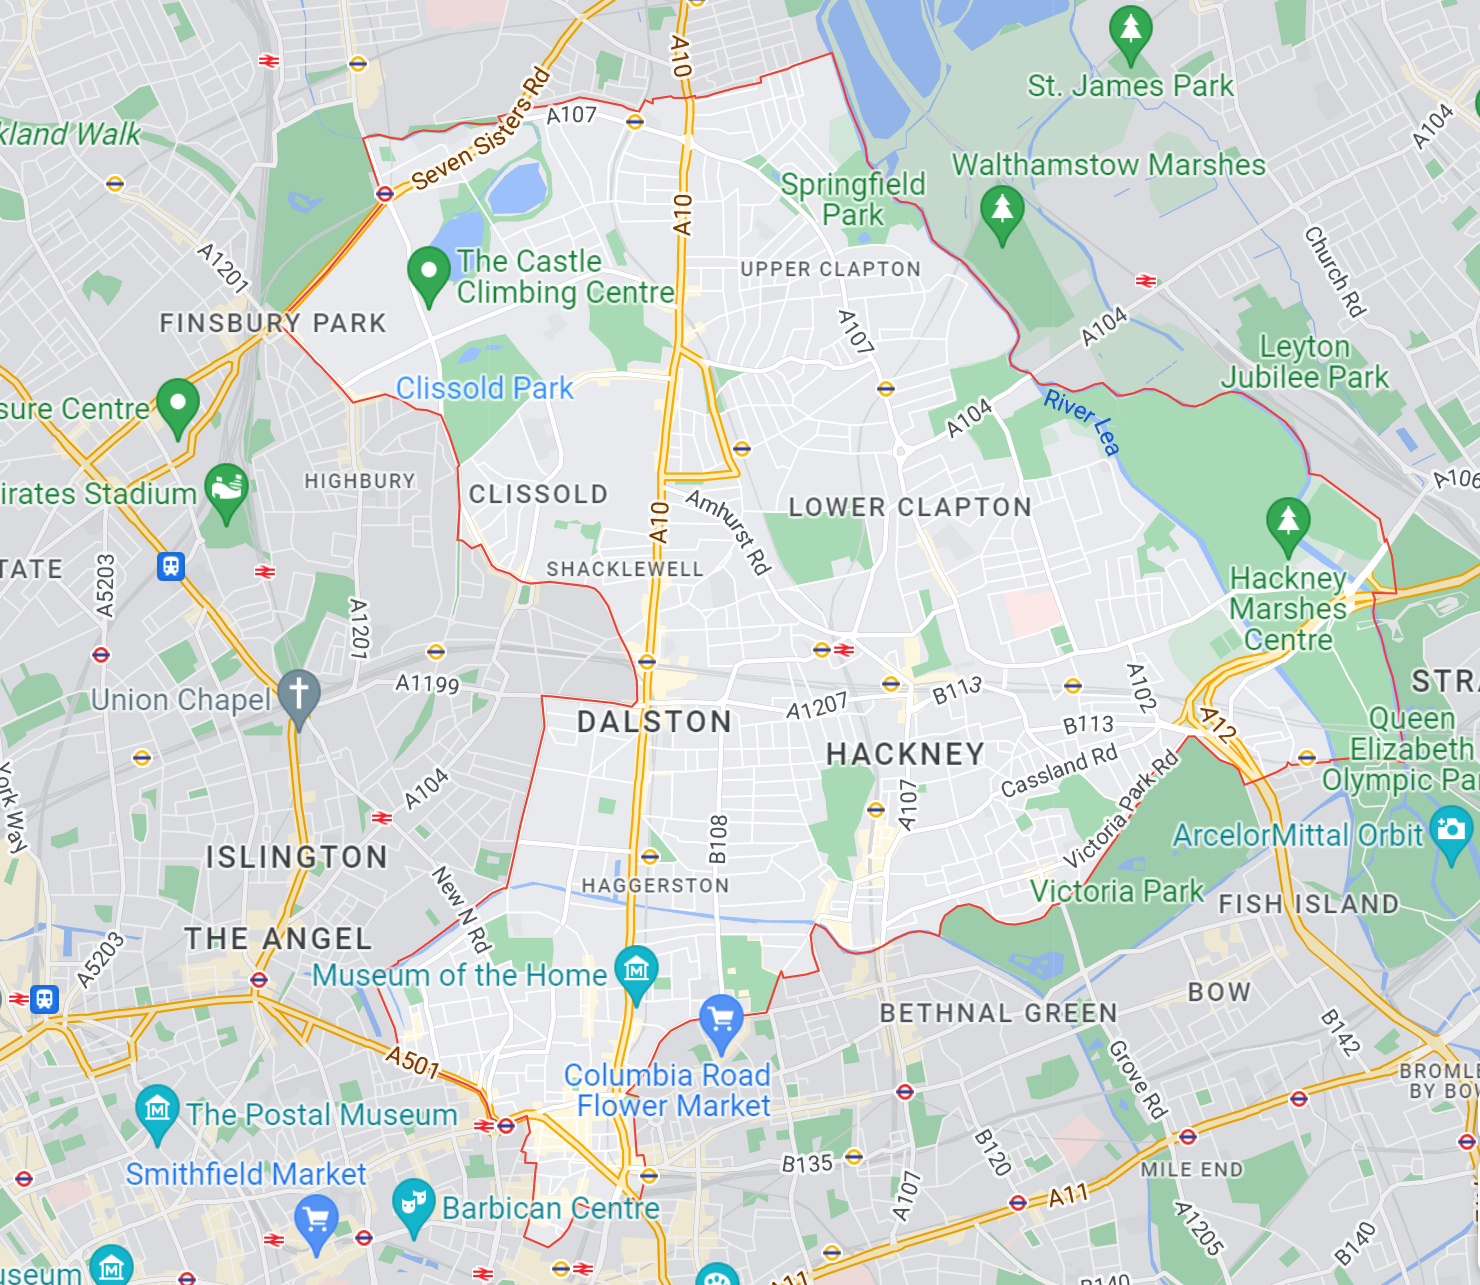 Map of Healthwatch Hackney area